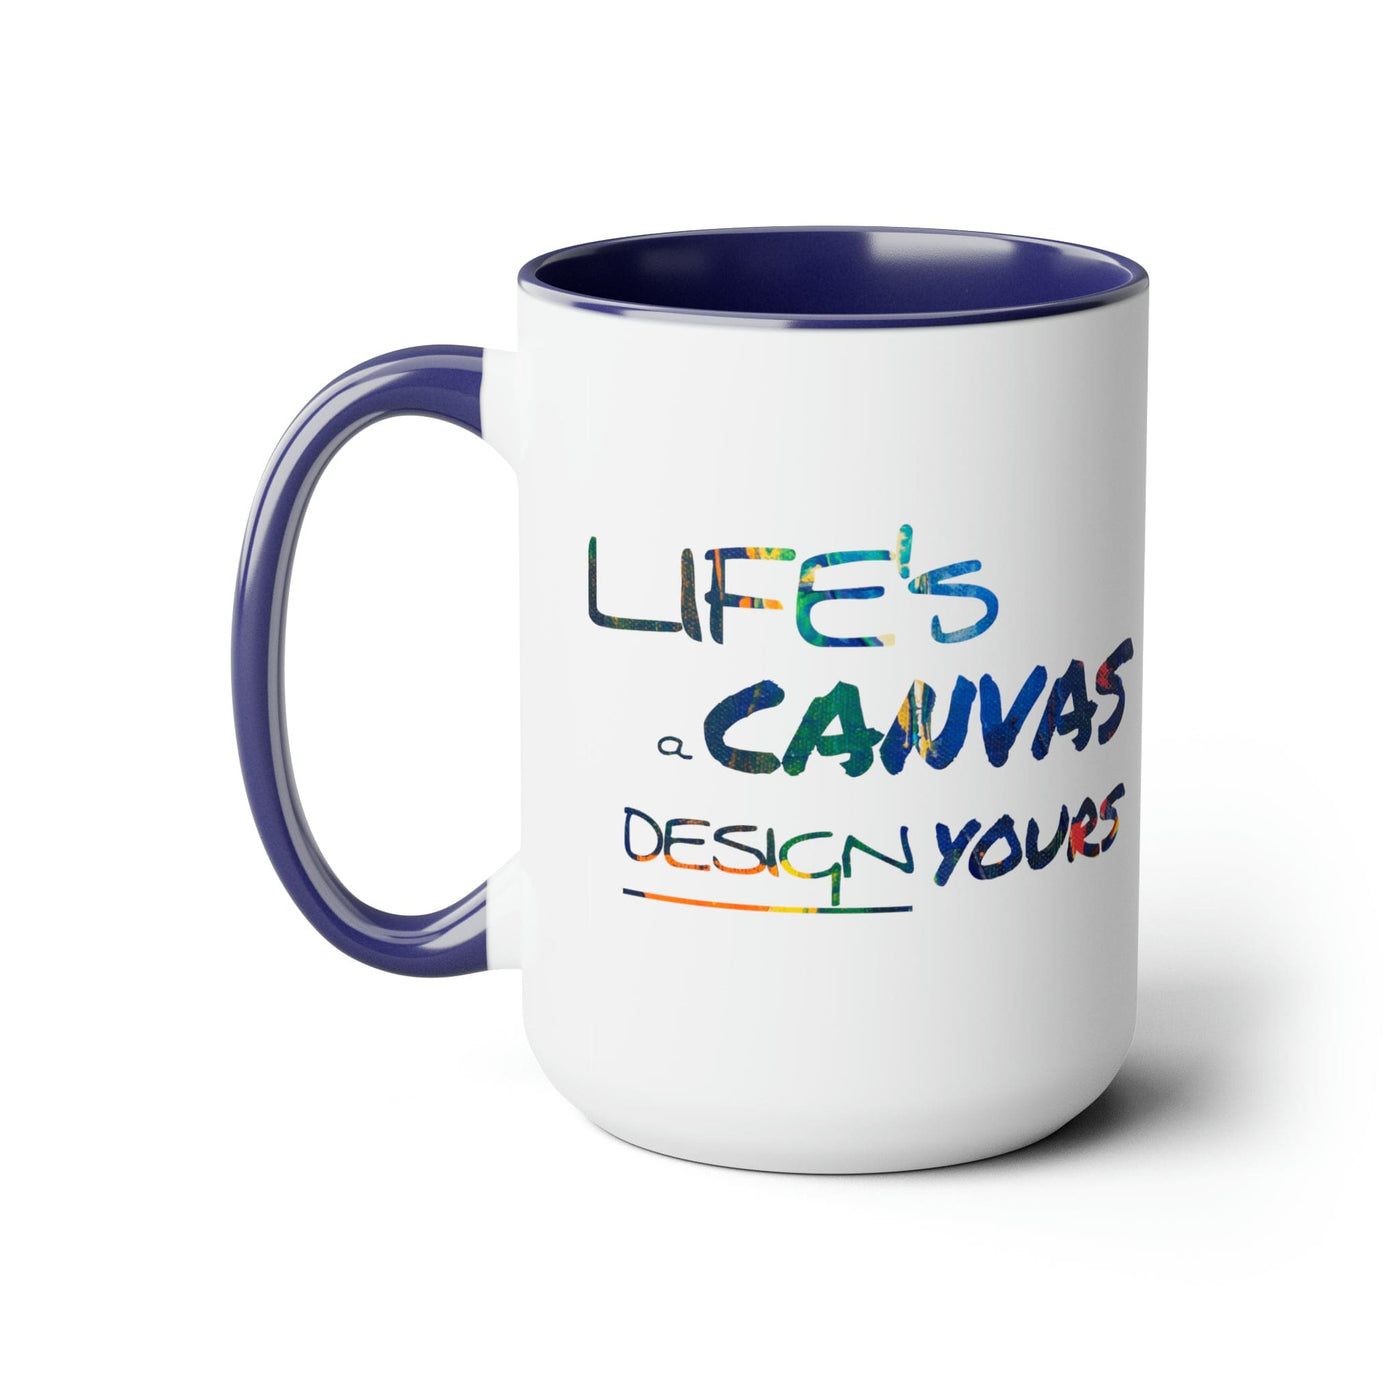 Accent Ceramic Coffee Mug 15oz - Life’s a Canvas Design Yours - Motivational